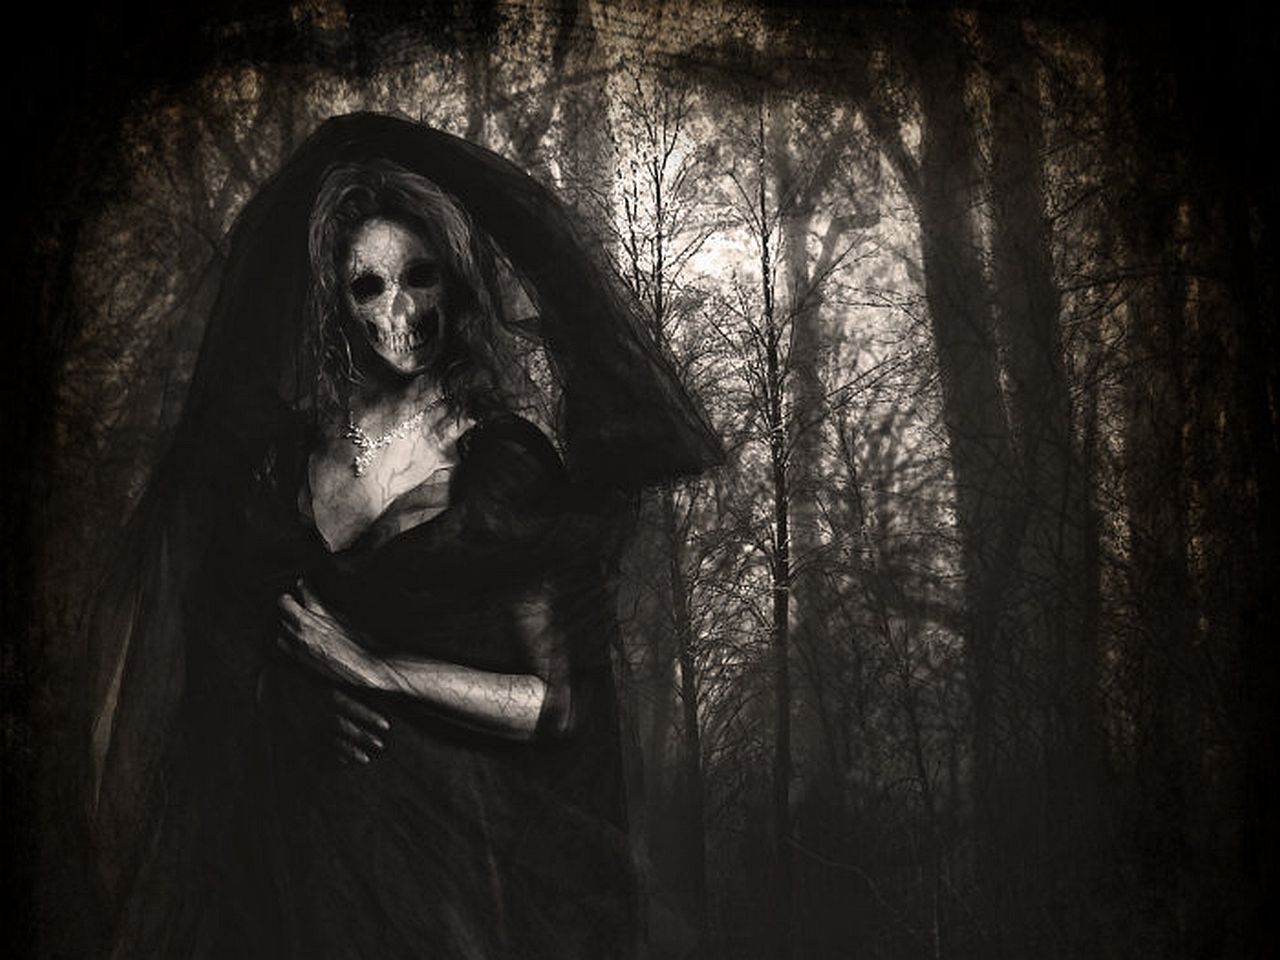 Creepy Wallpaper 1080p. Creepy background, Halloween background, Scary halloween background